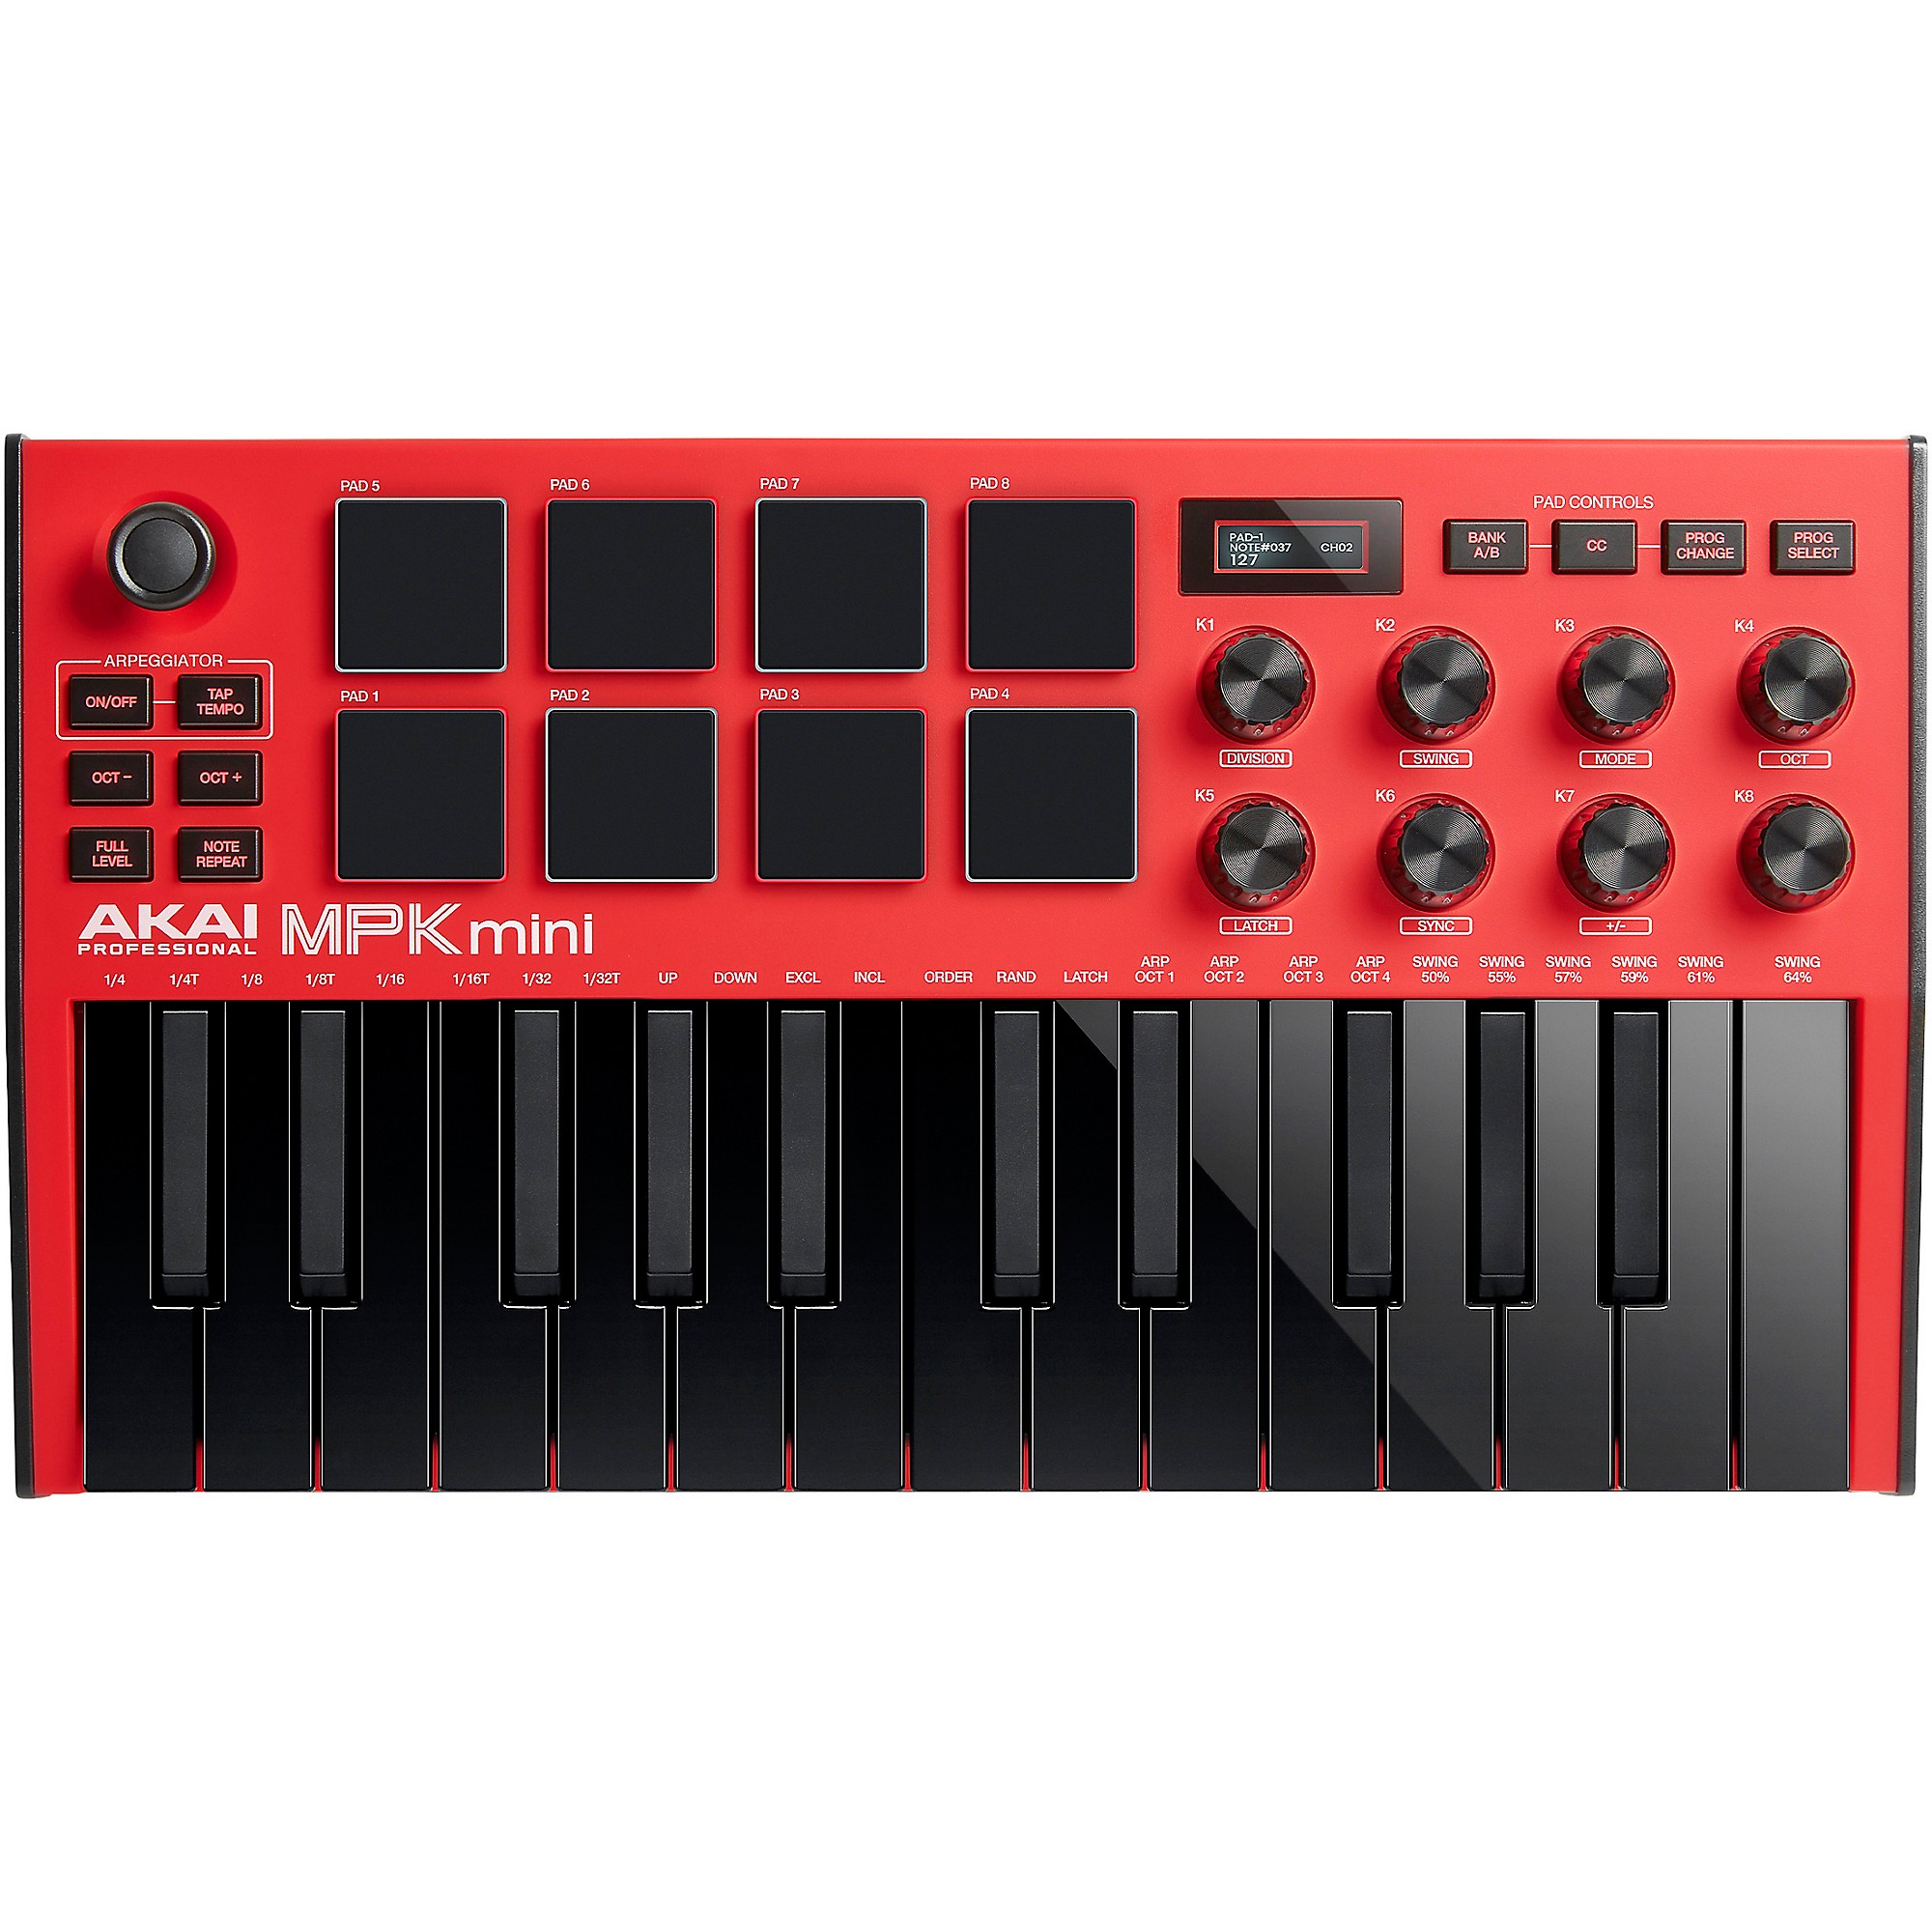 Akai Professional MPK mini mk3 Keyboard Controller Red | Guitar Center